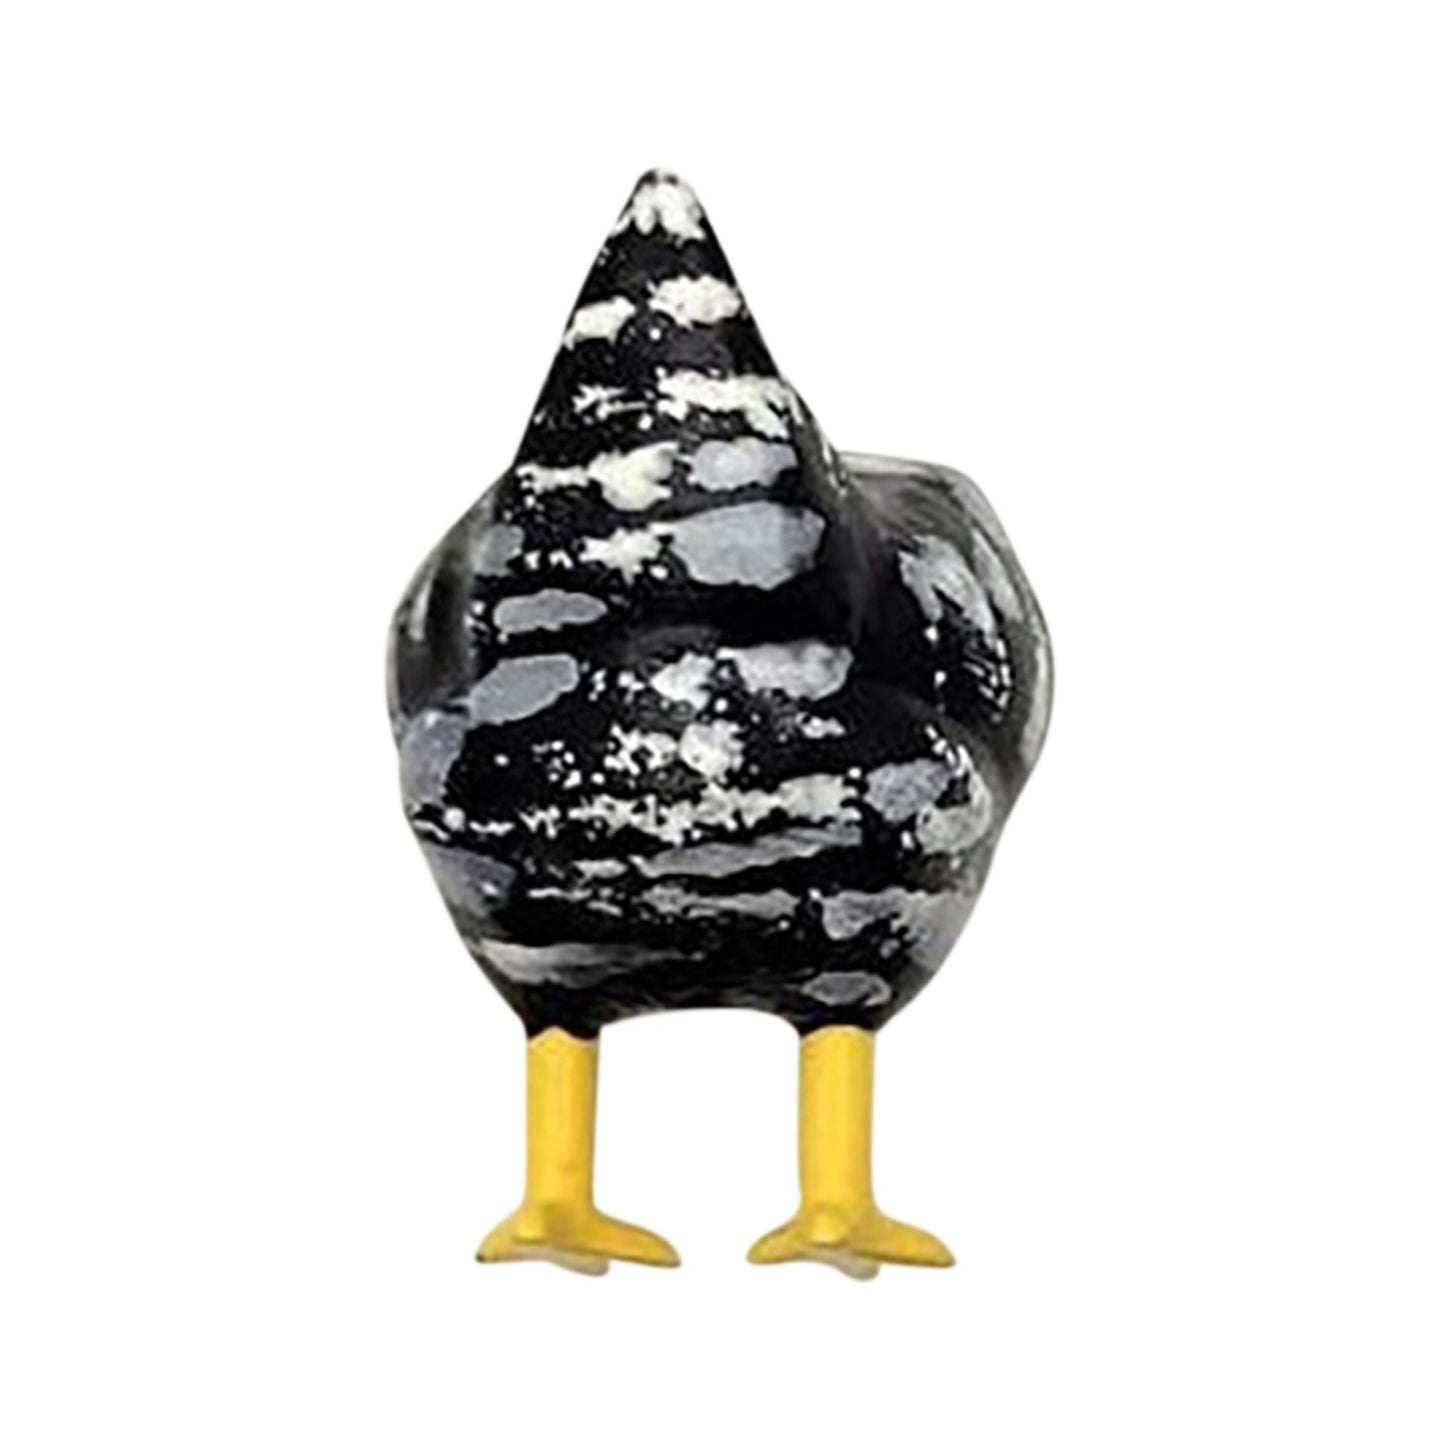 Chicken butt magnets - funny chicken gift - chicken home decor - farmer gift - black